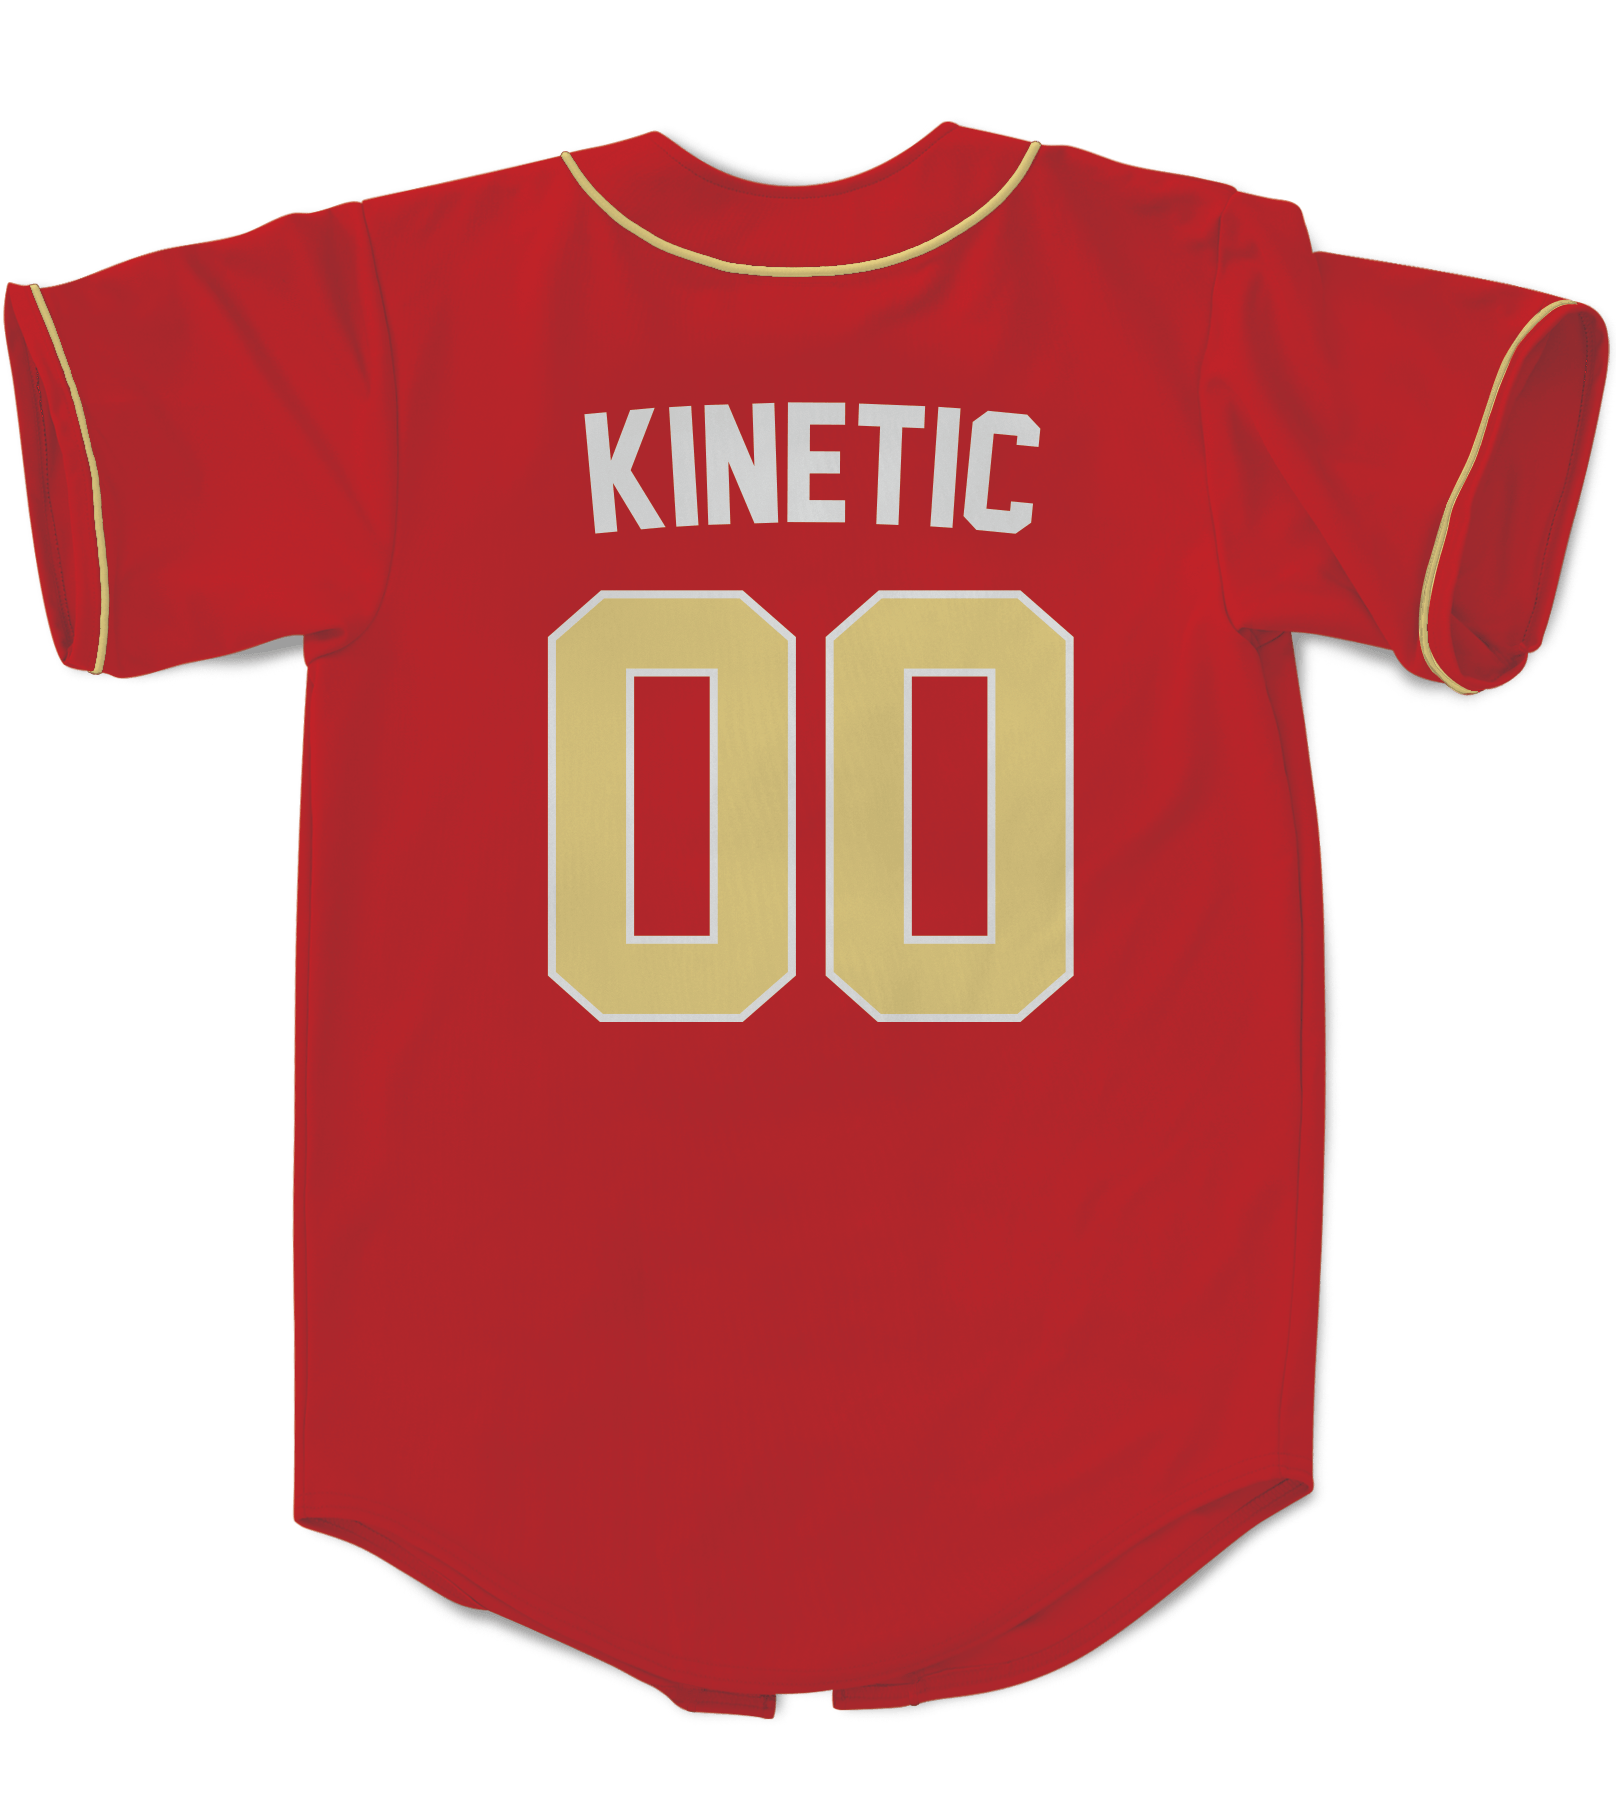 CHI OMEGA - The Block Baseball Jersey Premium Baseball Kinetic Society LLC 